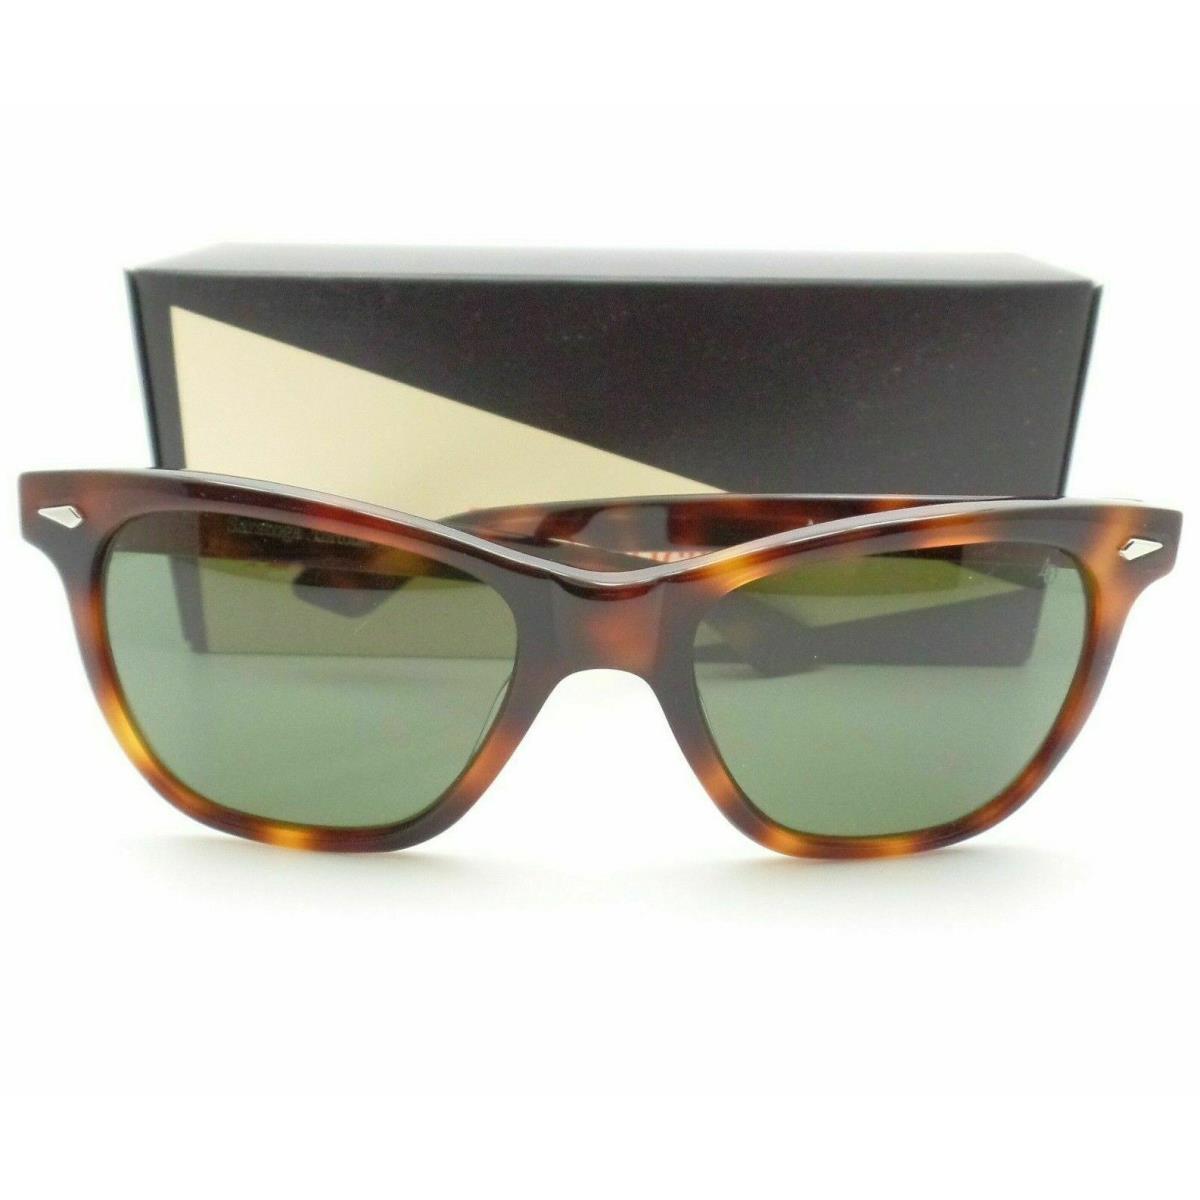 AO American Optical Saratoga Sunglasses Tortoise 1 Green Polar or Frame Only 52/19/145 Tinted